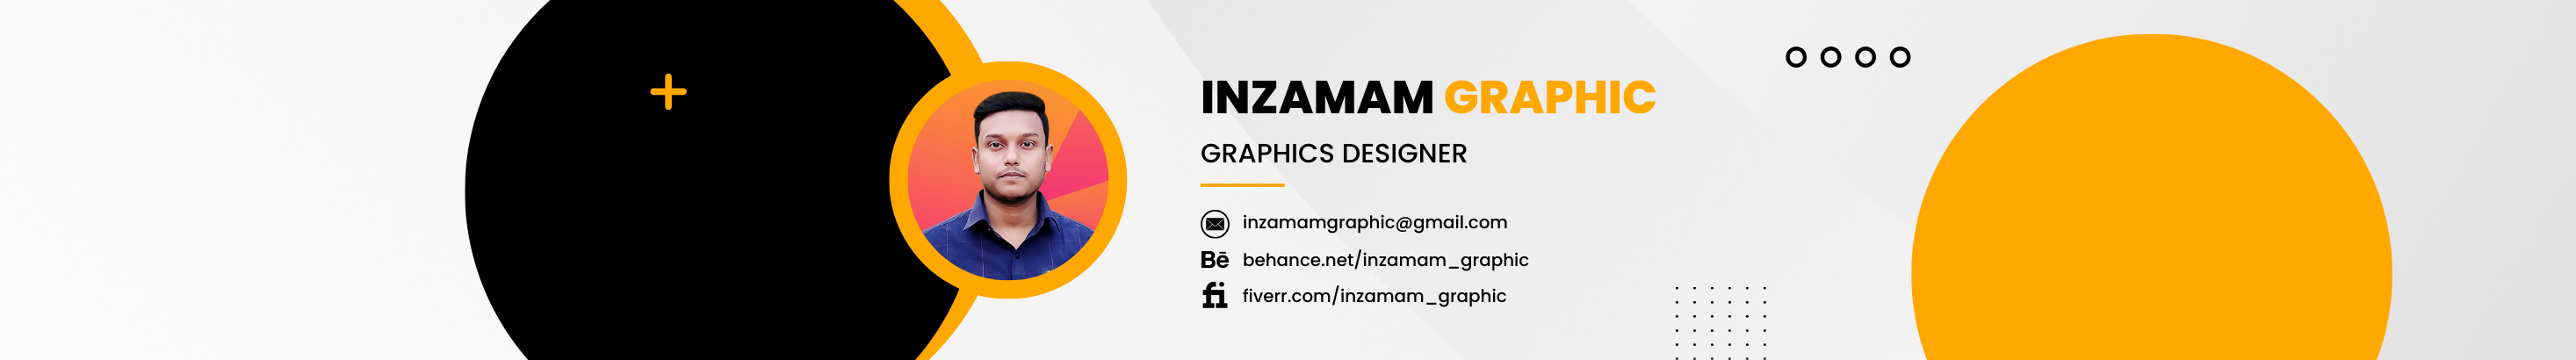 Inzamam Graphic's profile banner